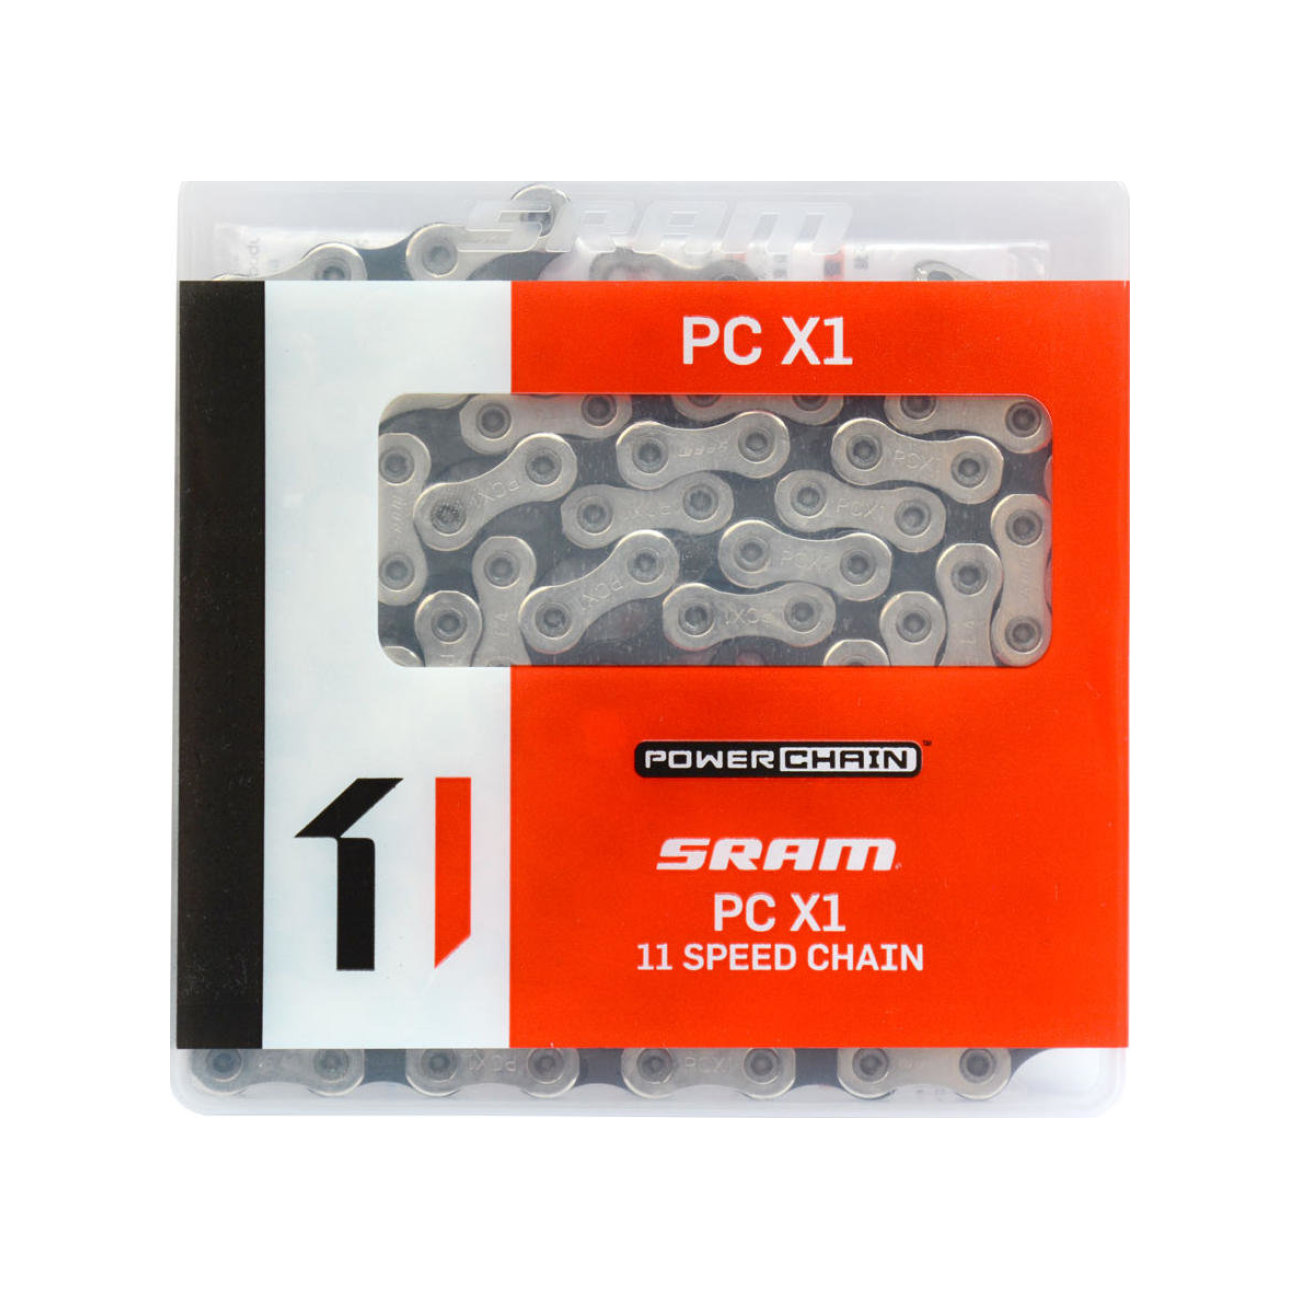 
                SRAM reťaz - PC X1 SOLIDPIN - strieborná
            